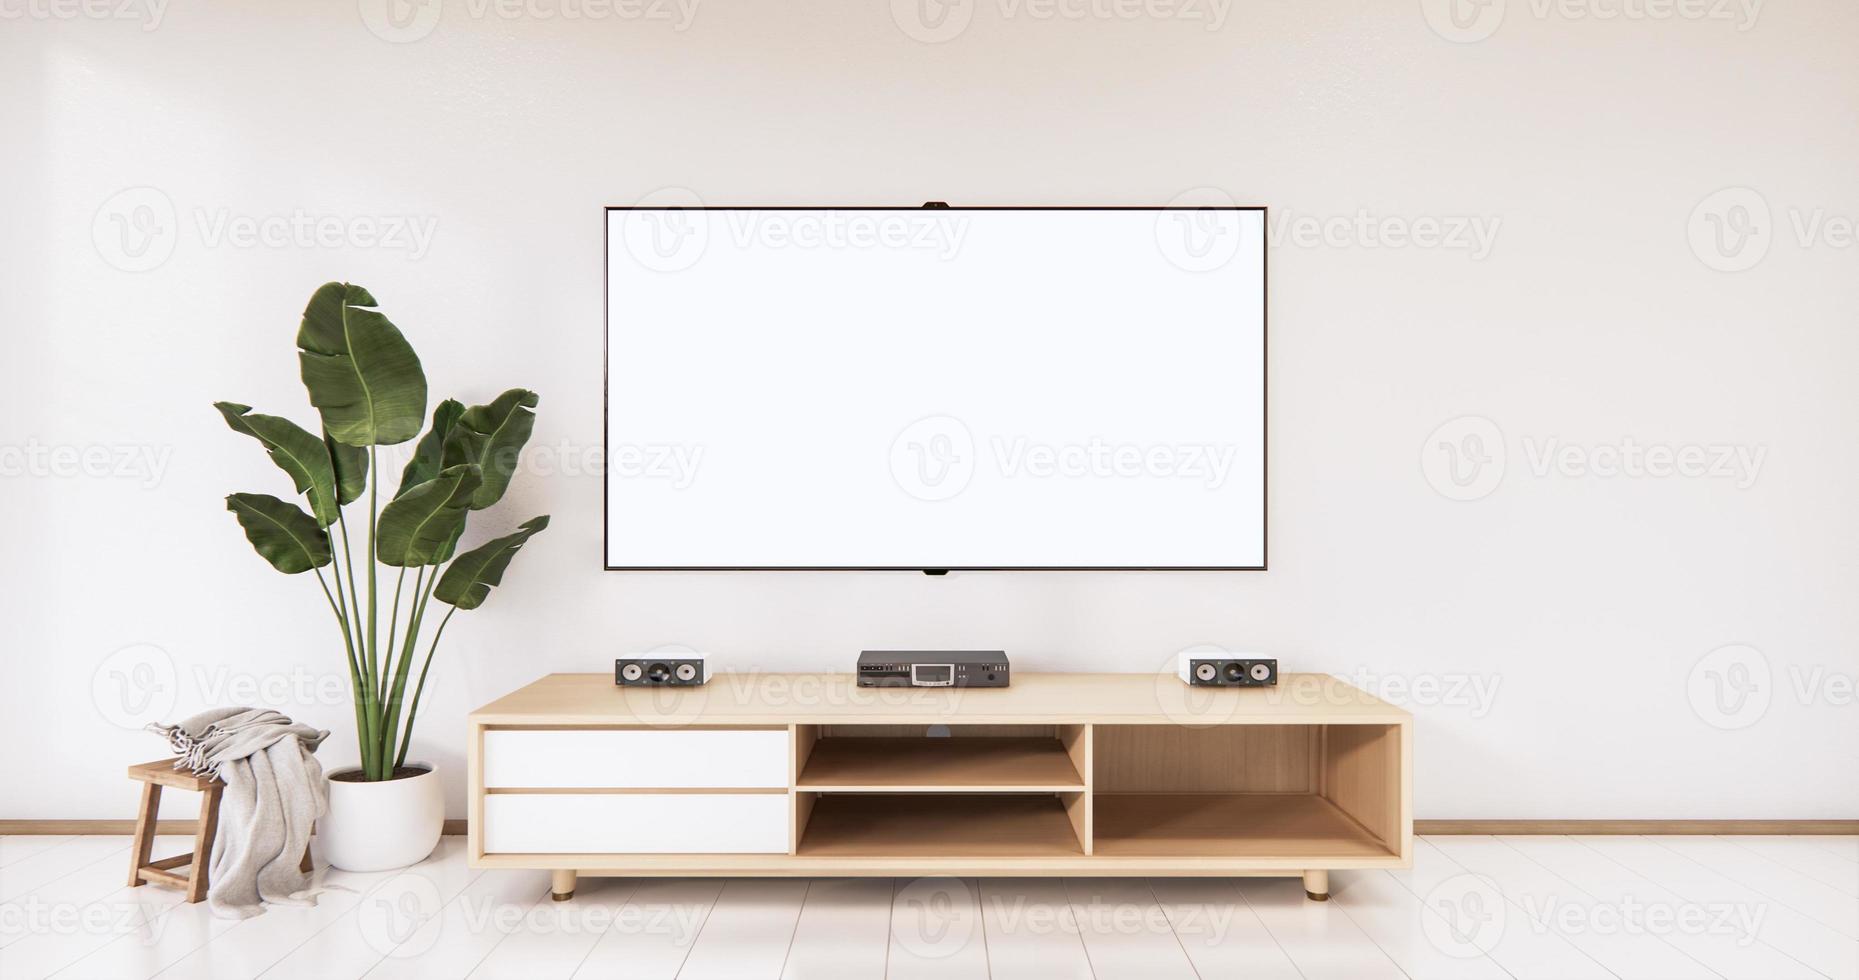 skåp trä japansk design på vardagsrum zen stil tom vägg background.3d rendering foto